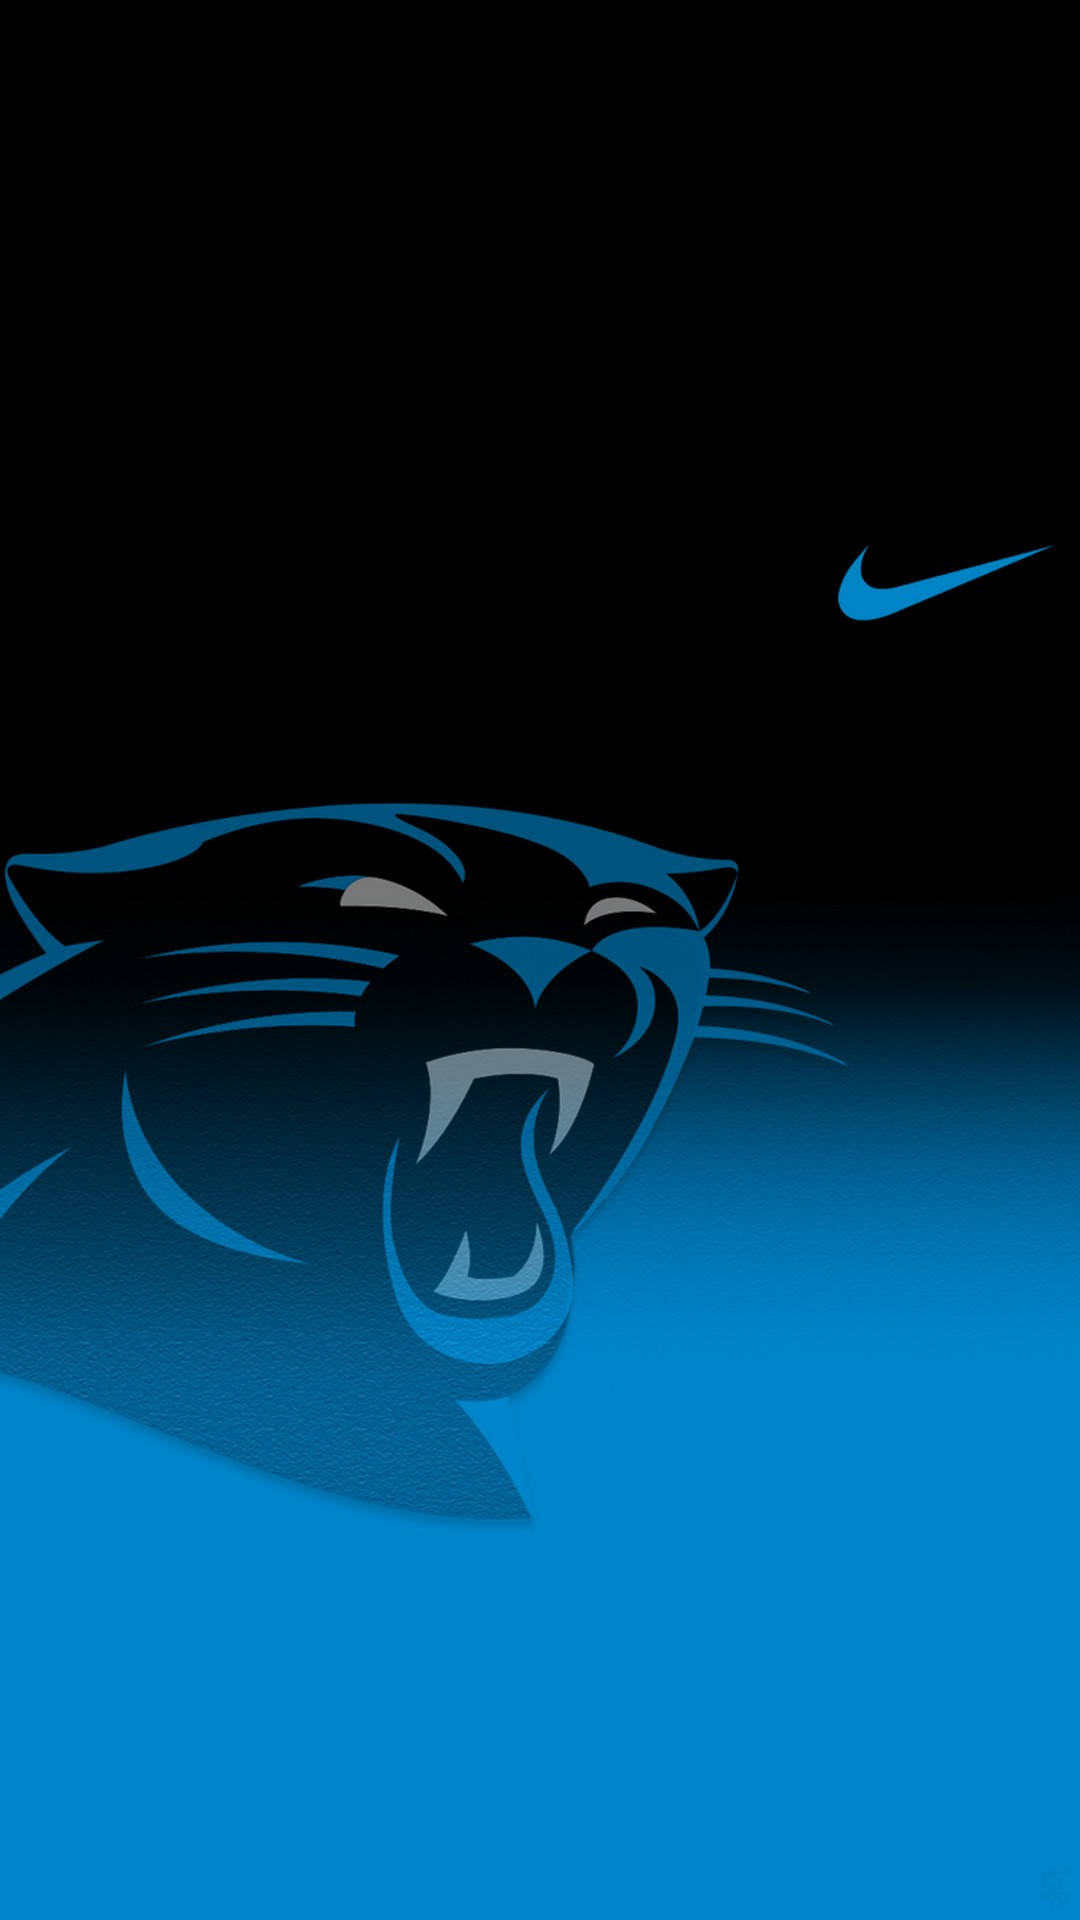 Carolina Panthers 1080X1920 Wallpaper and Background Image